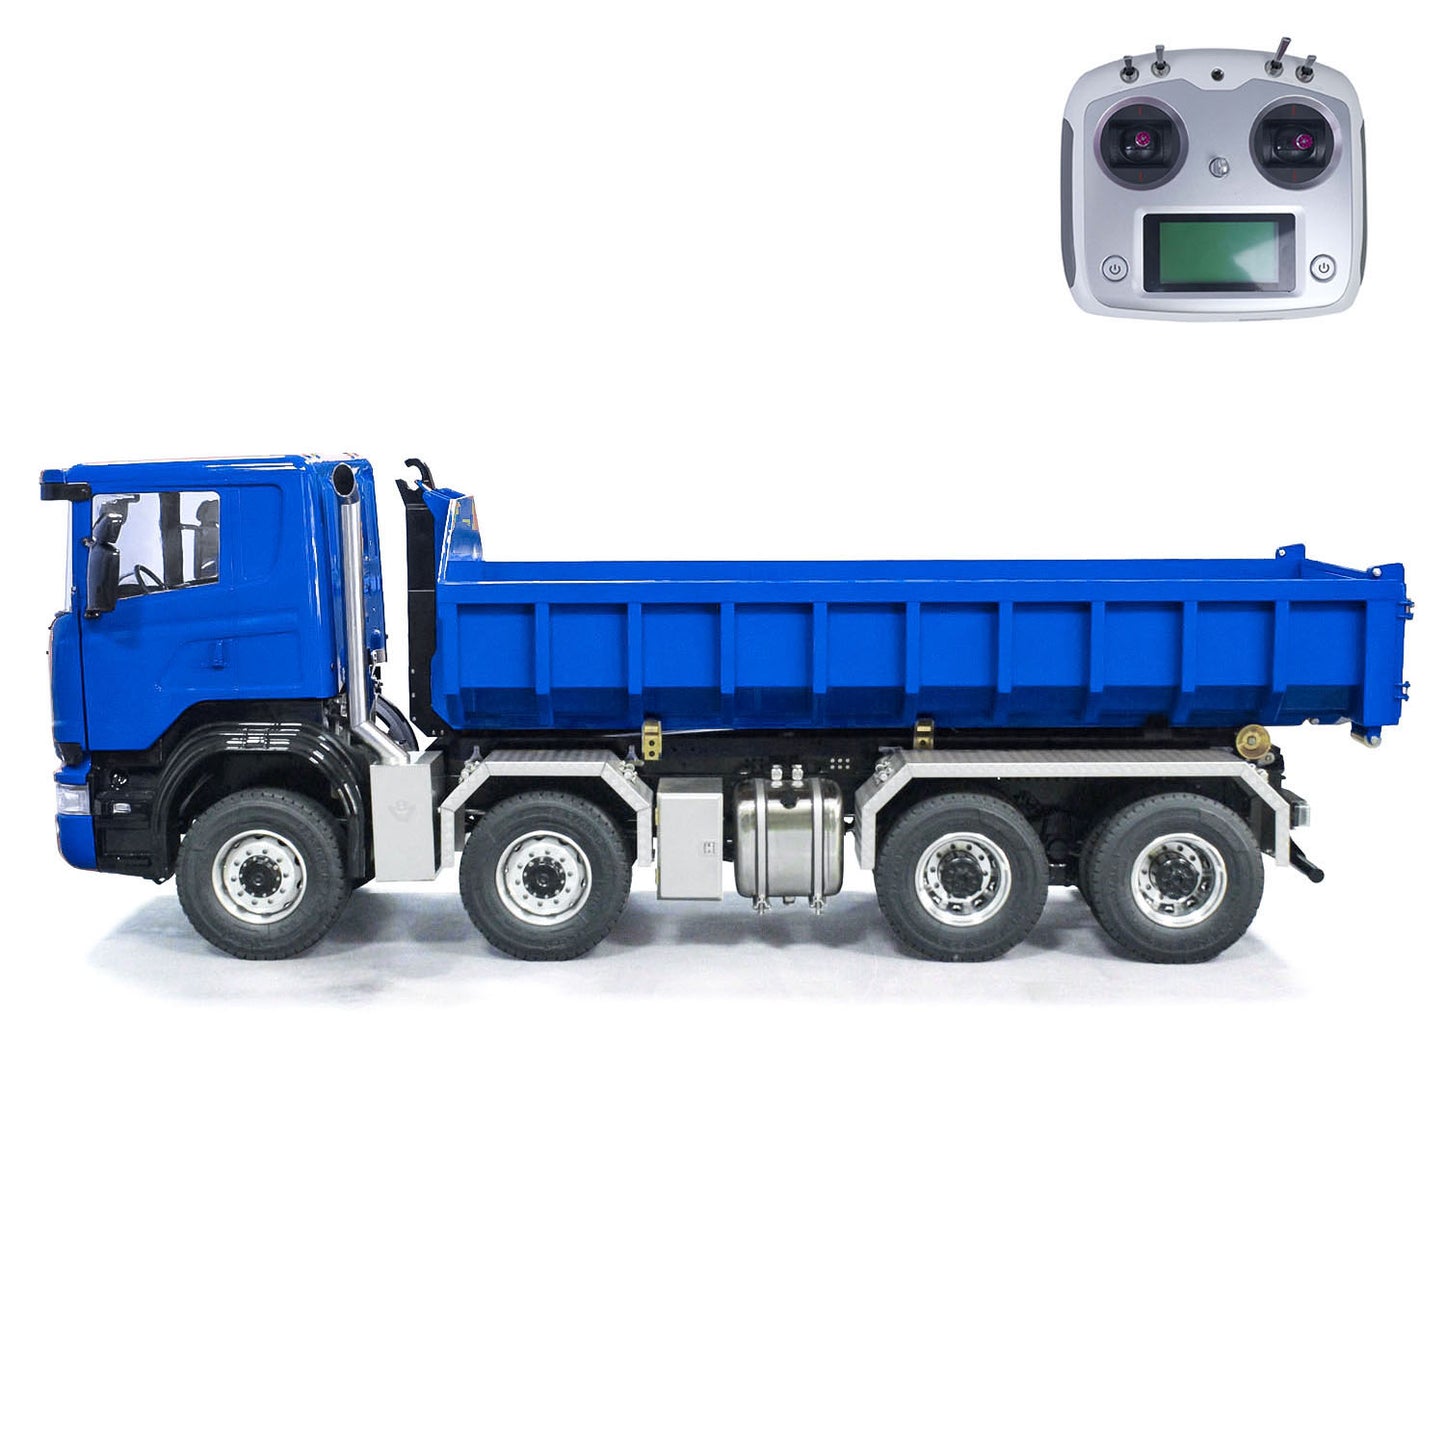 1/14 8x8 RC Hydraulic Full Dump Truck Roll-on Dumper Trucks 3-speed Transmission Differential Lock Axles Motor Servo ESC